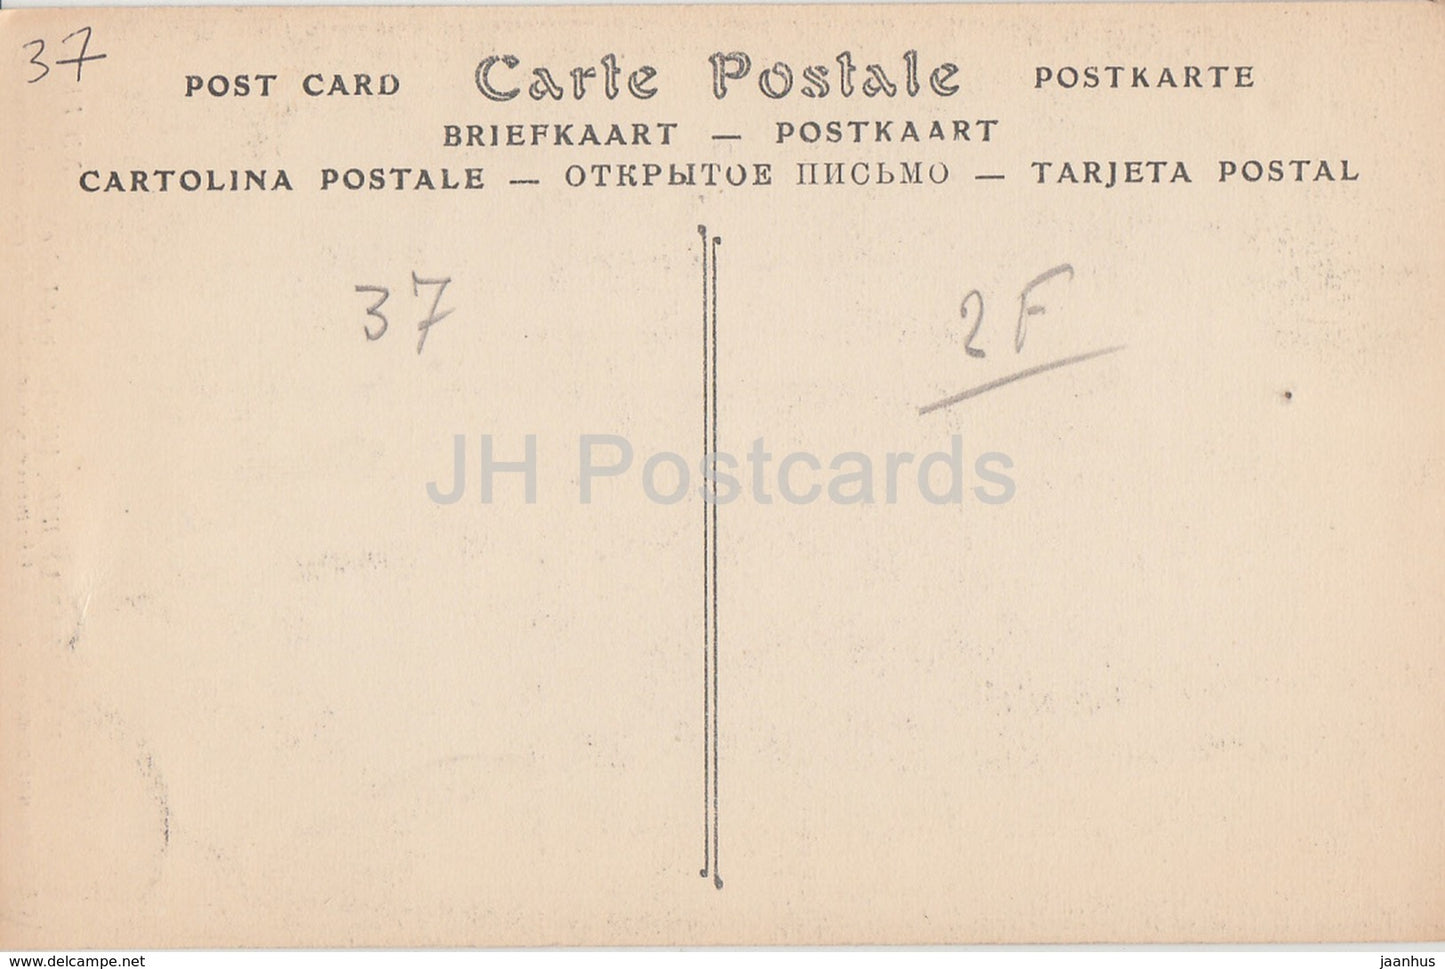 Azay Le Rideau - Chateau National - Cheminee d'une Salle - Schloss - 88 - alte Postkarte - Frankreich - unbenutzt